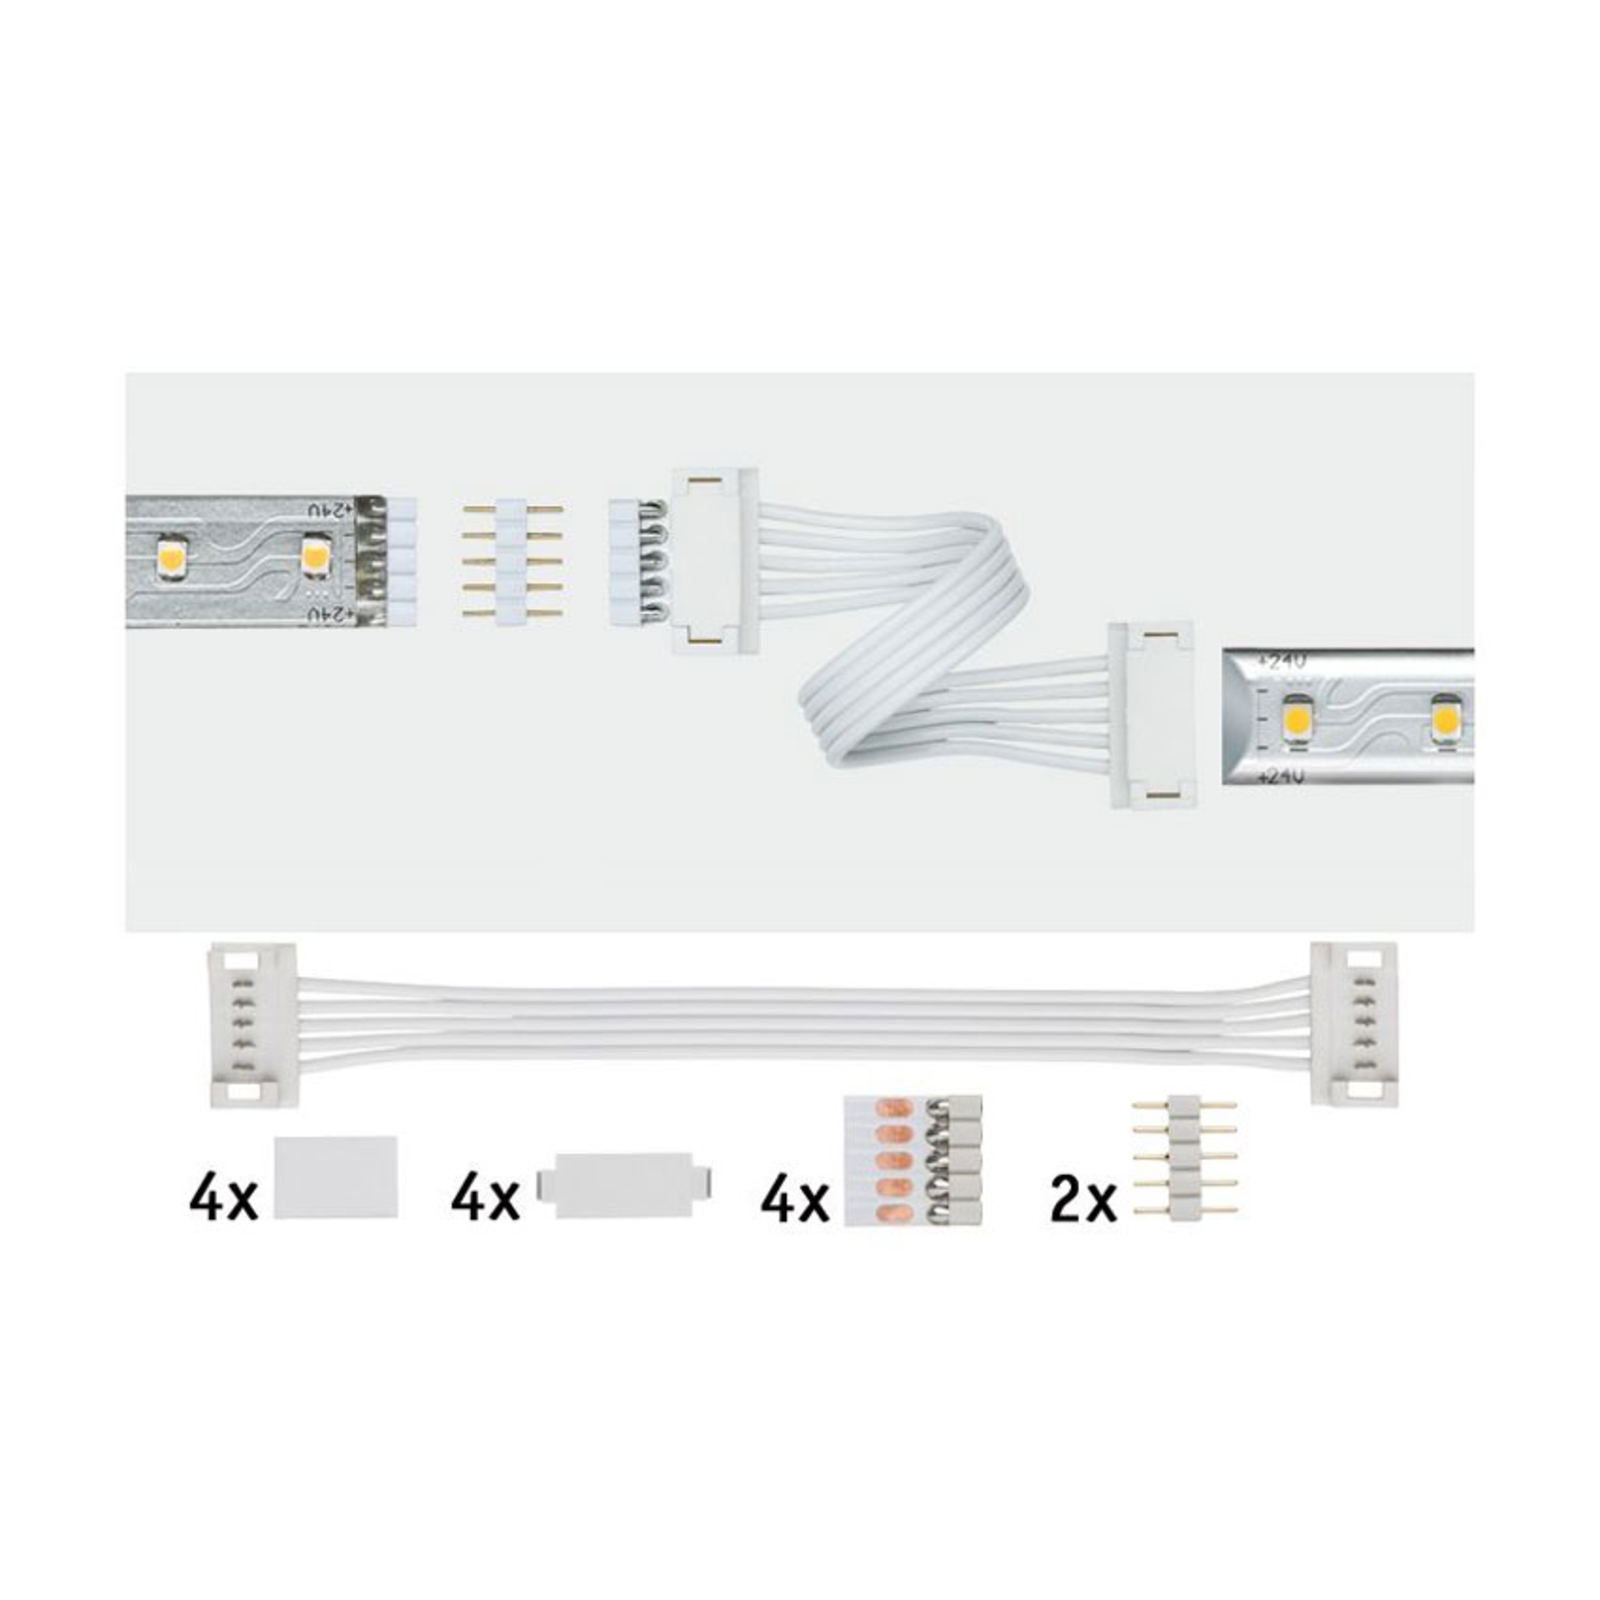 Paulmann MaxLED universal connector, 2-pack white